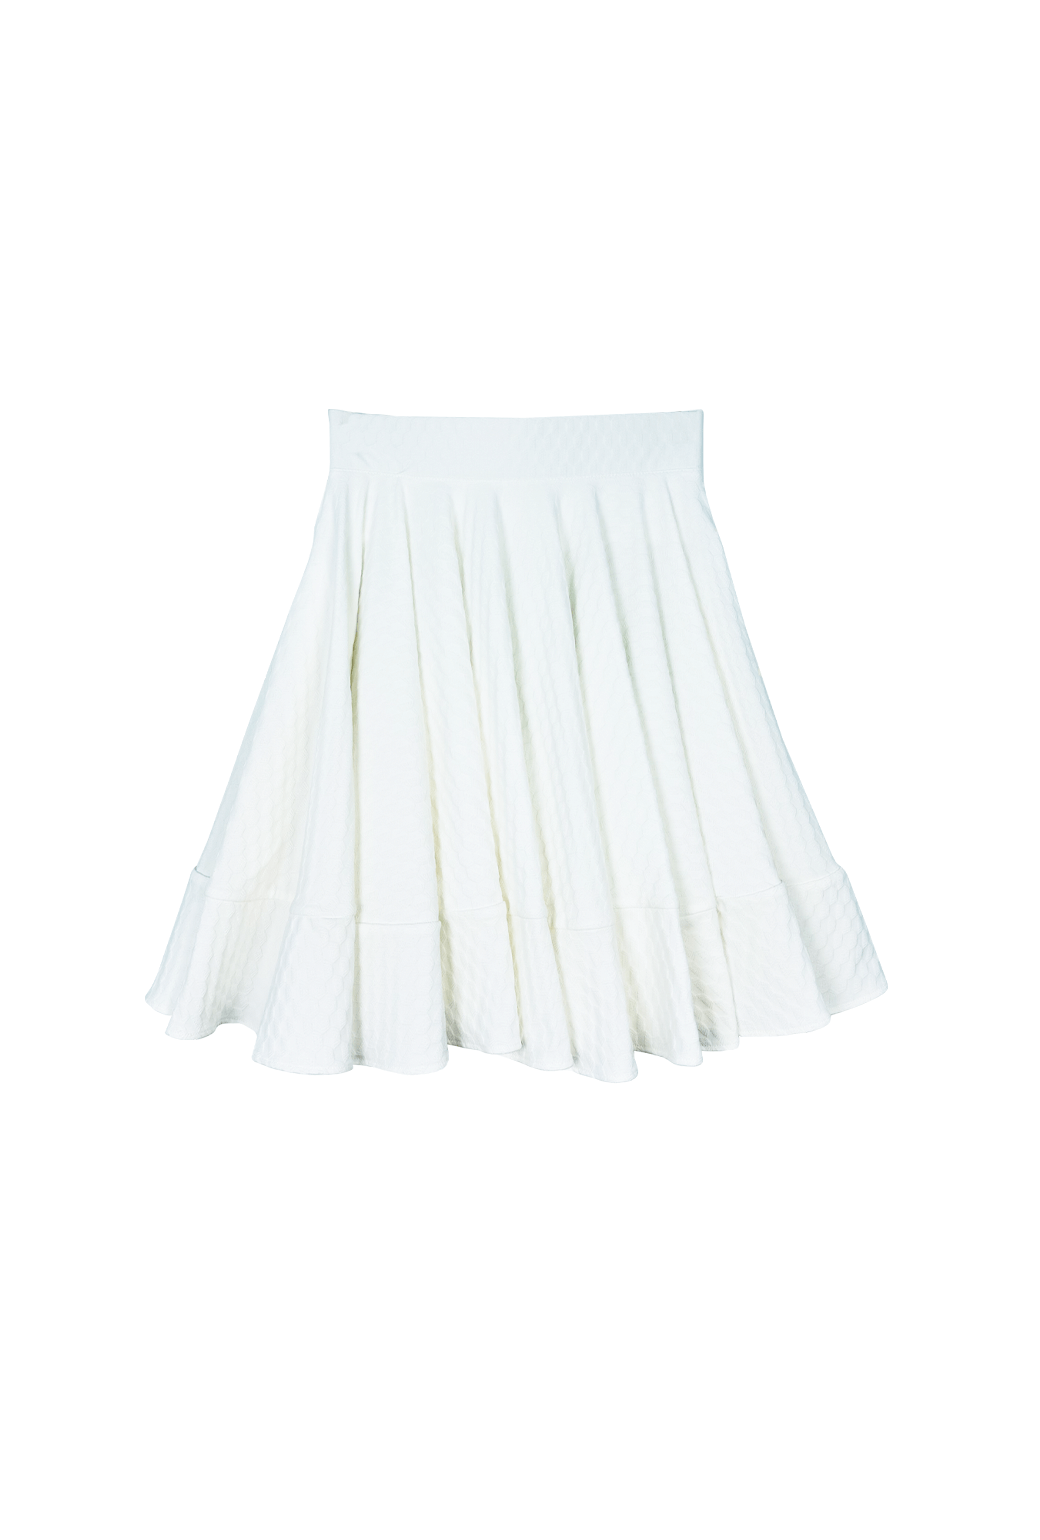 Buru x Kelly Golightly Mini Lucinda Circle Skirt - White Knit Jacquard